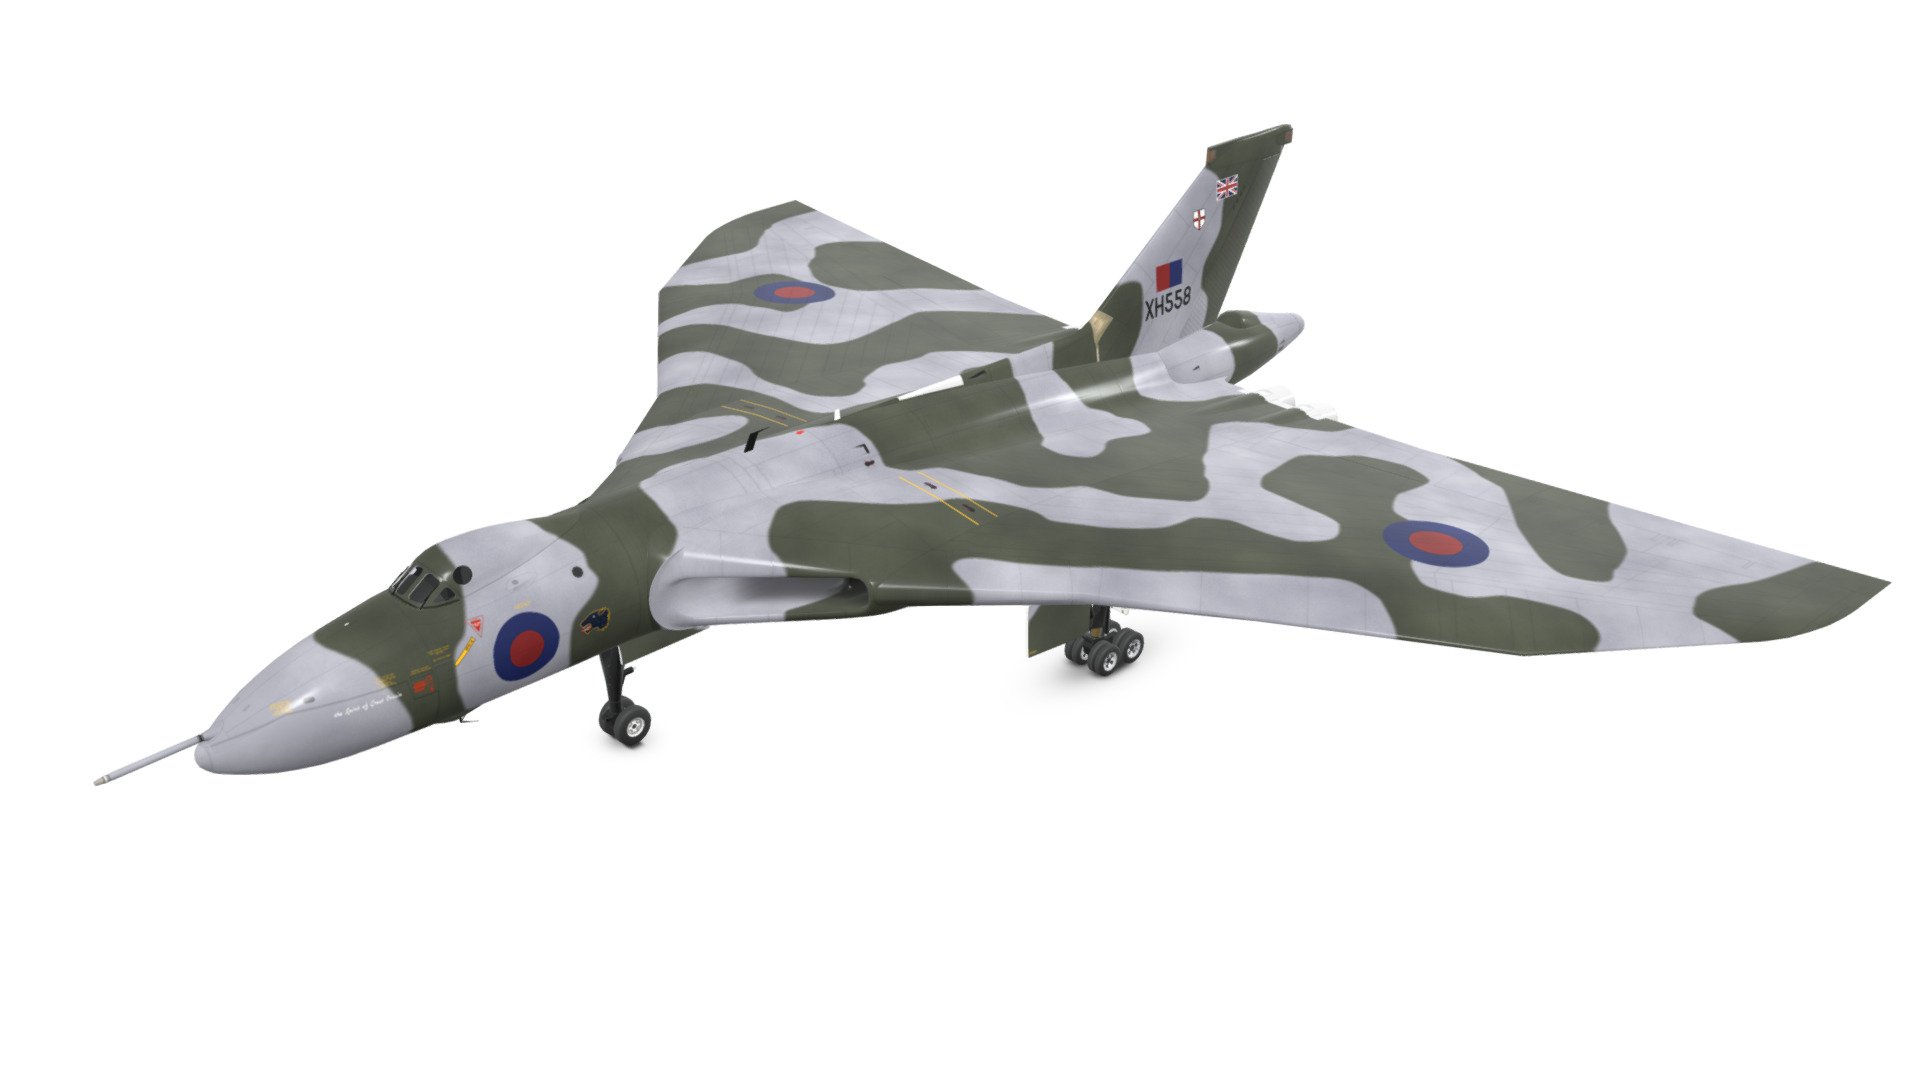 Low polygon model of an Avro Vulcan B2 - Avro Vulcan B2 - 3D model by Tony Elms (@tonyelms) 3d model